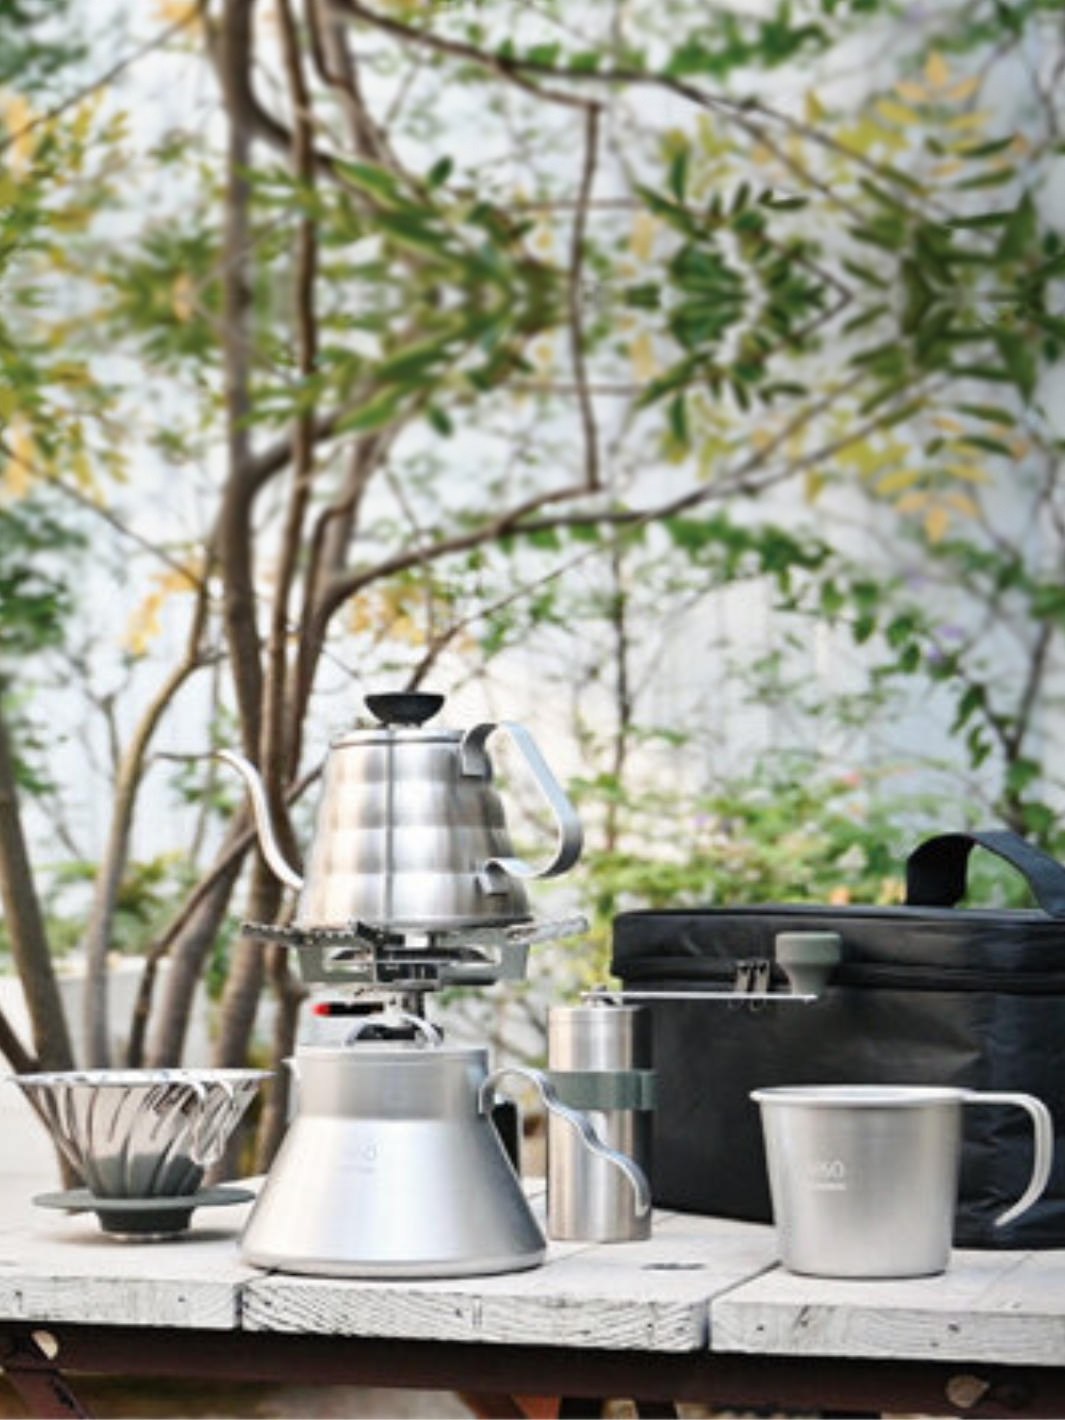 V60 Outdoor Coffee Full Set – HARIO Europe